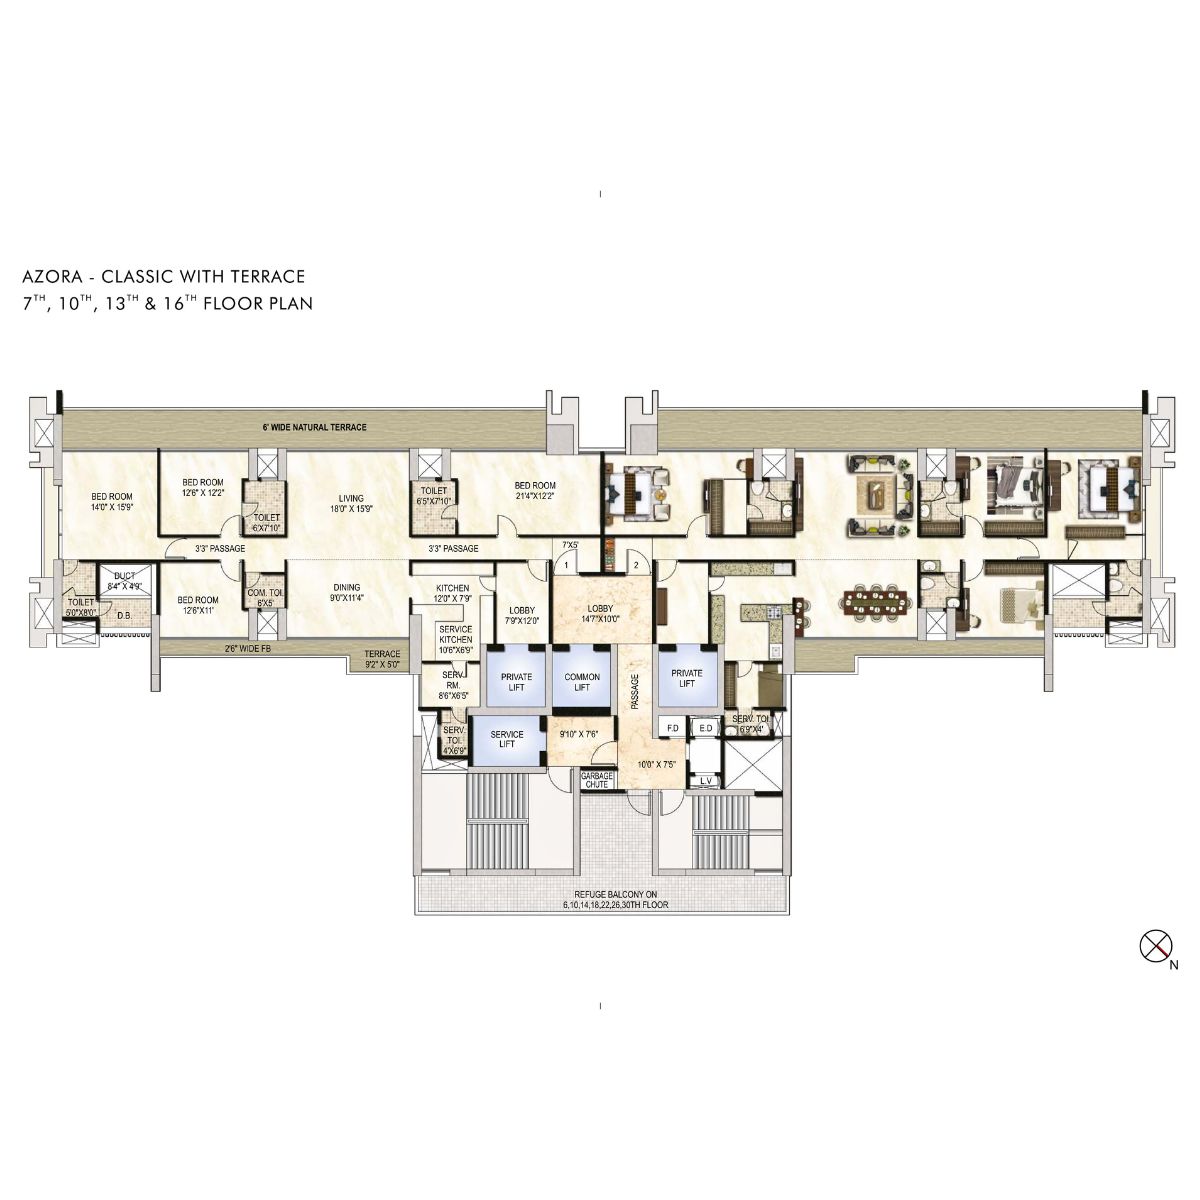 One-Akshar-Floor-Plan-Azora-Classic-With-Terrace-7th-10th-13th-&-16th